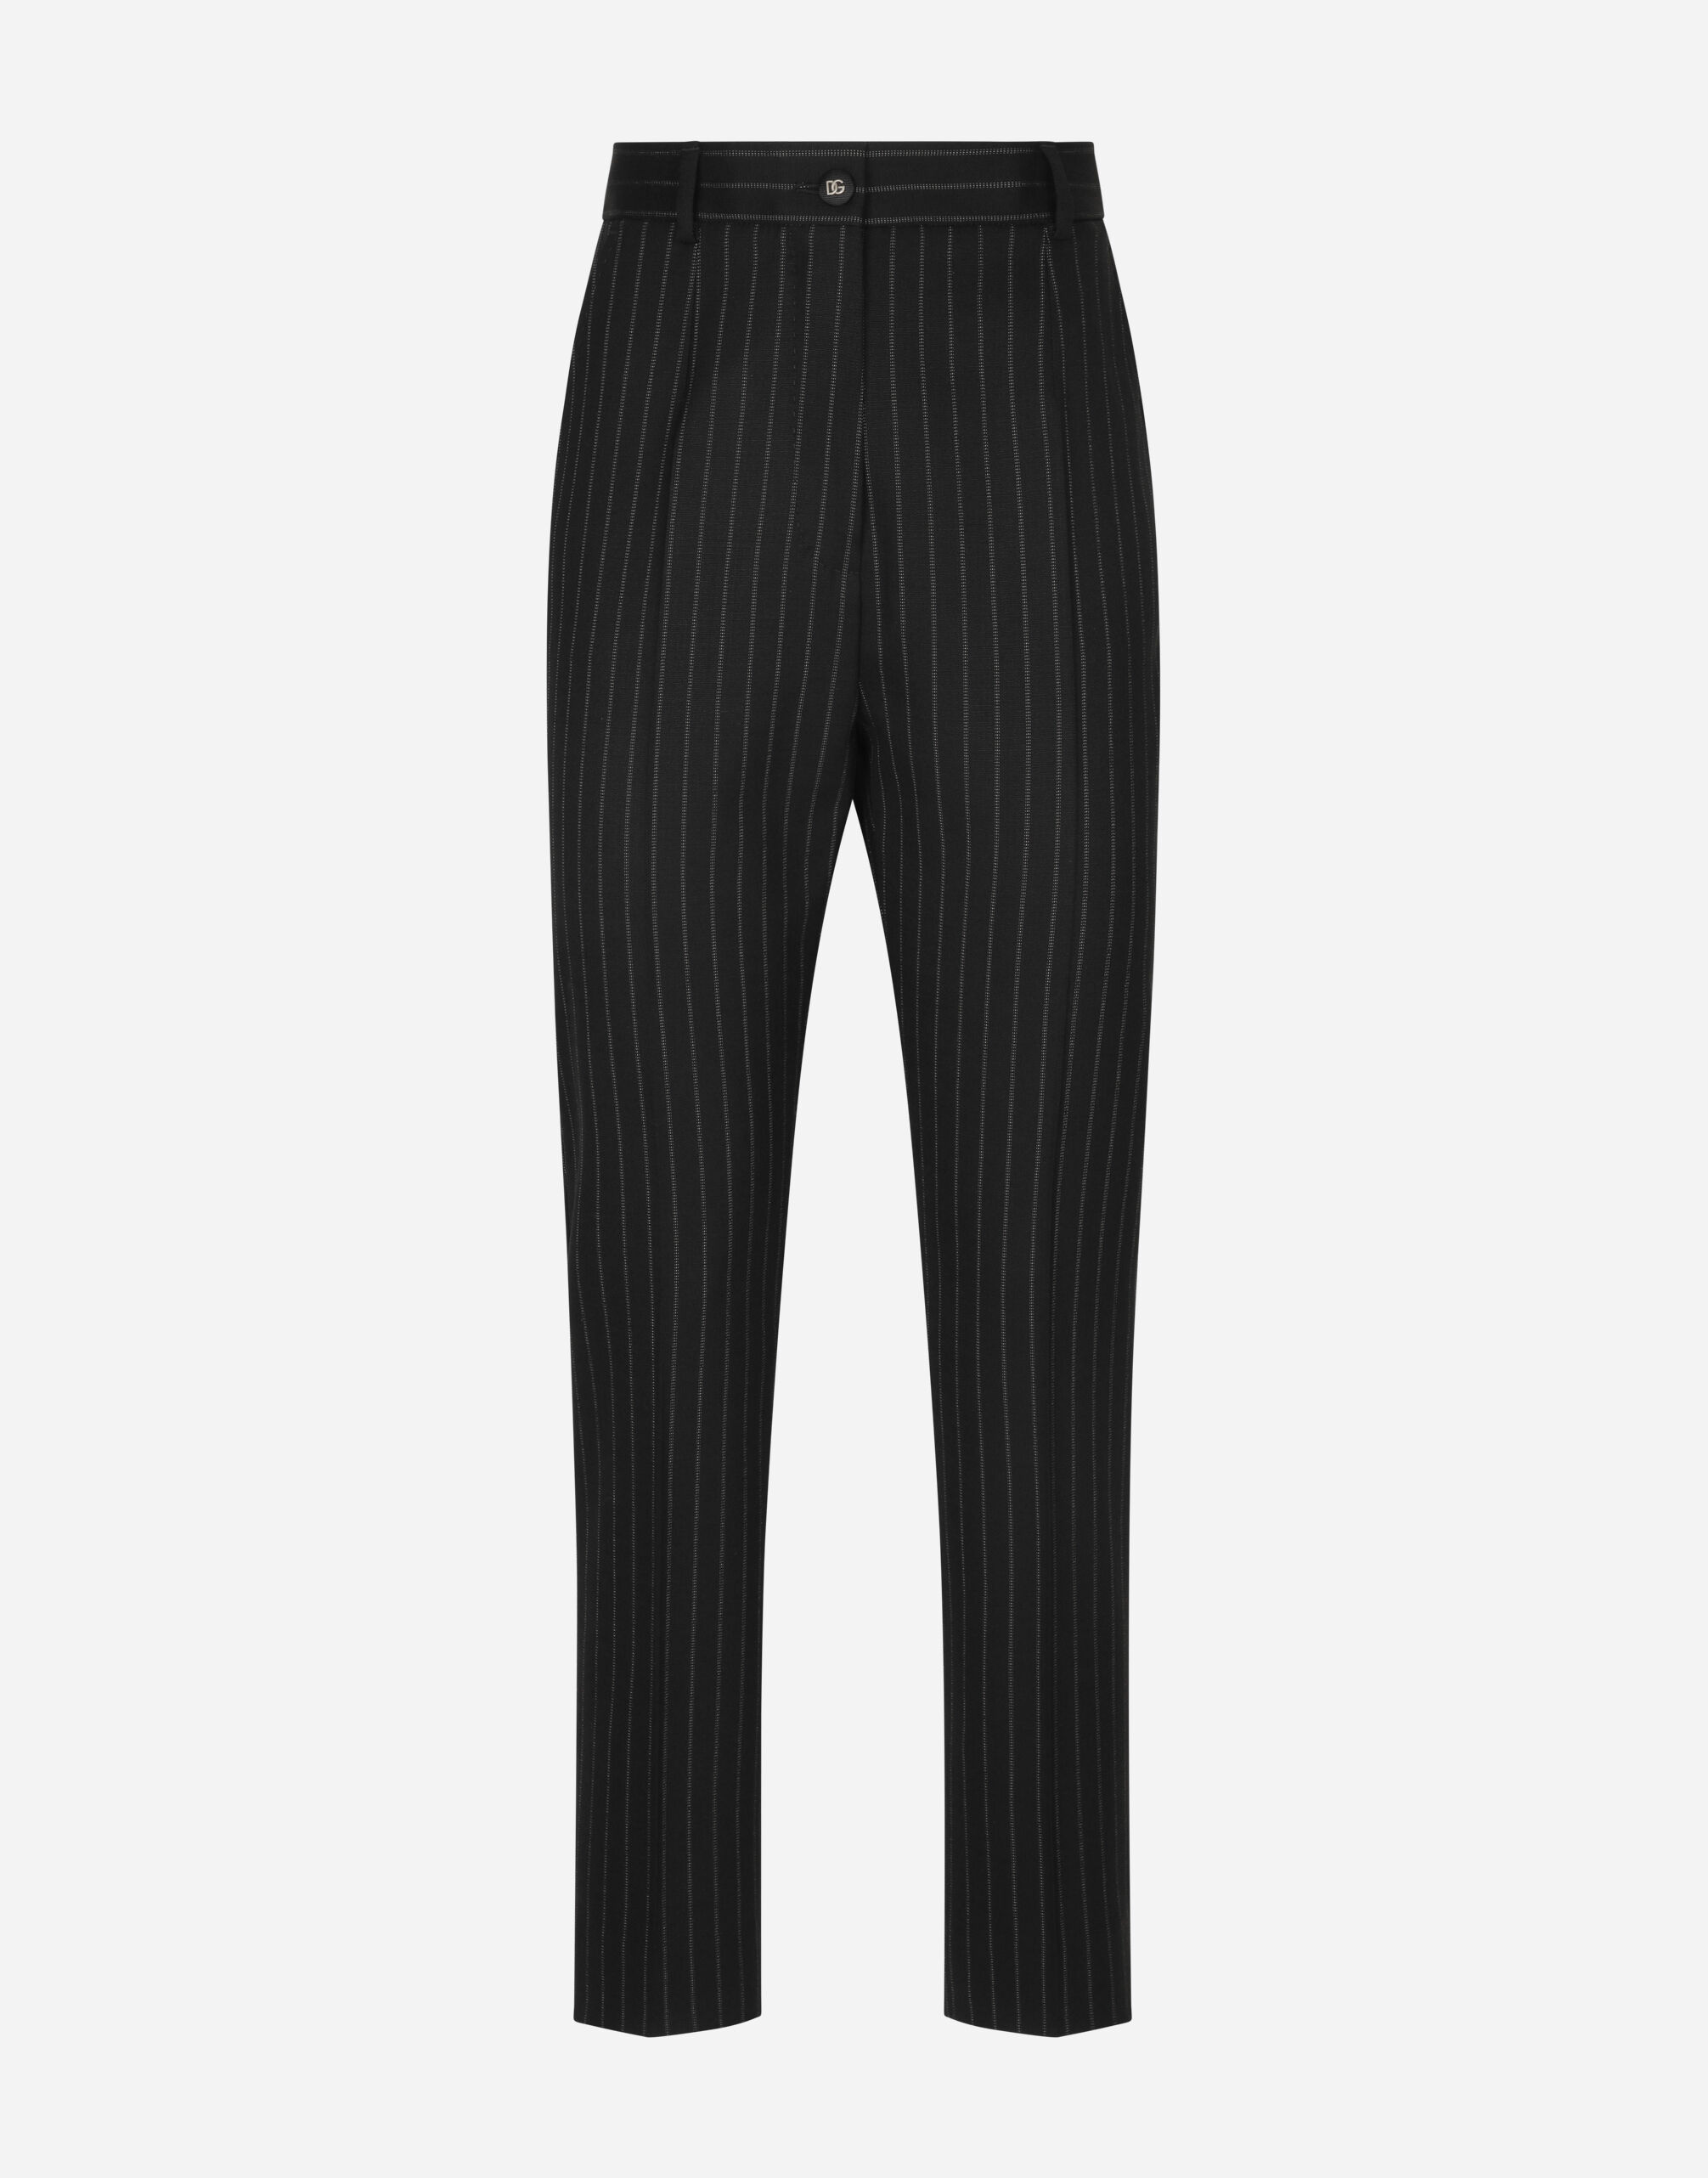 Dolce & Gabbana Tailored pinstripe wool pants Print FTCJUTHS5NO